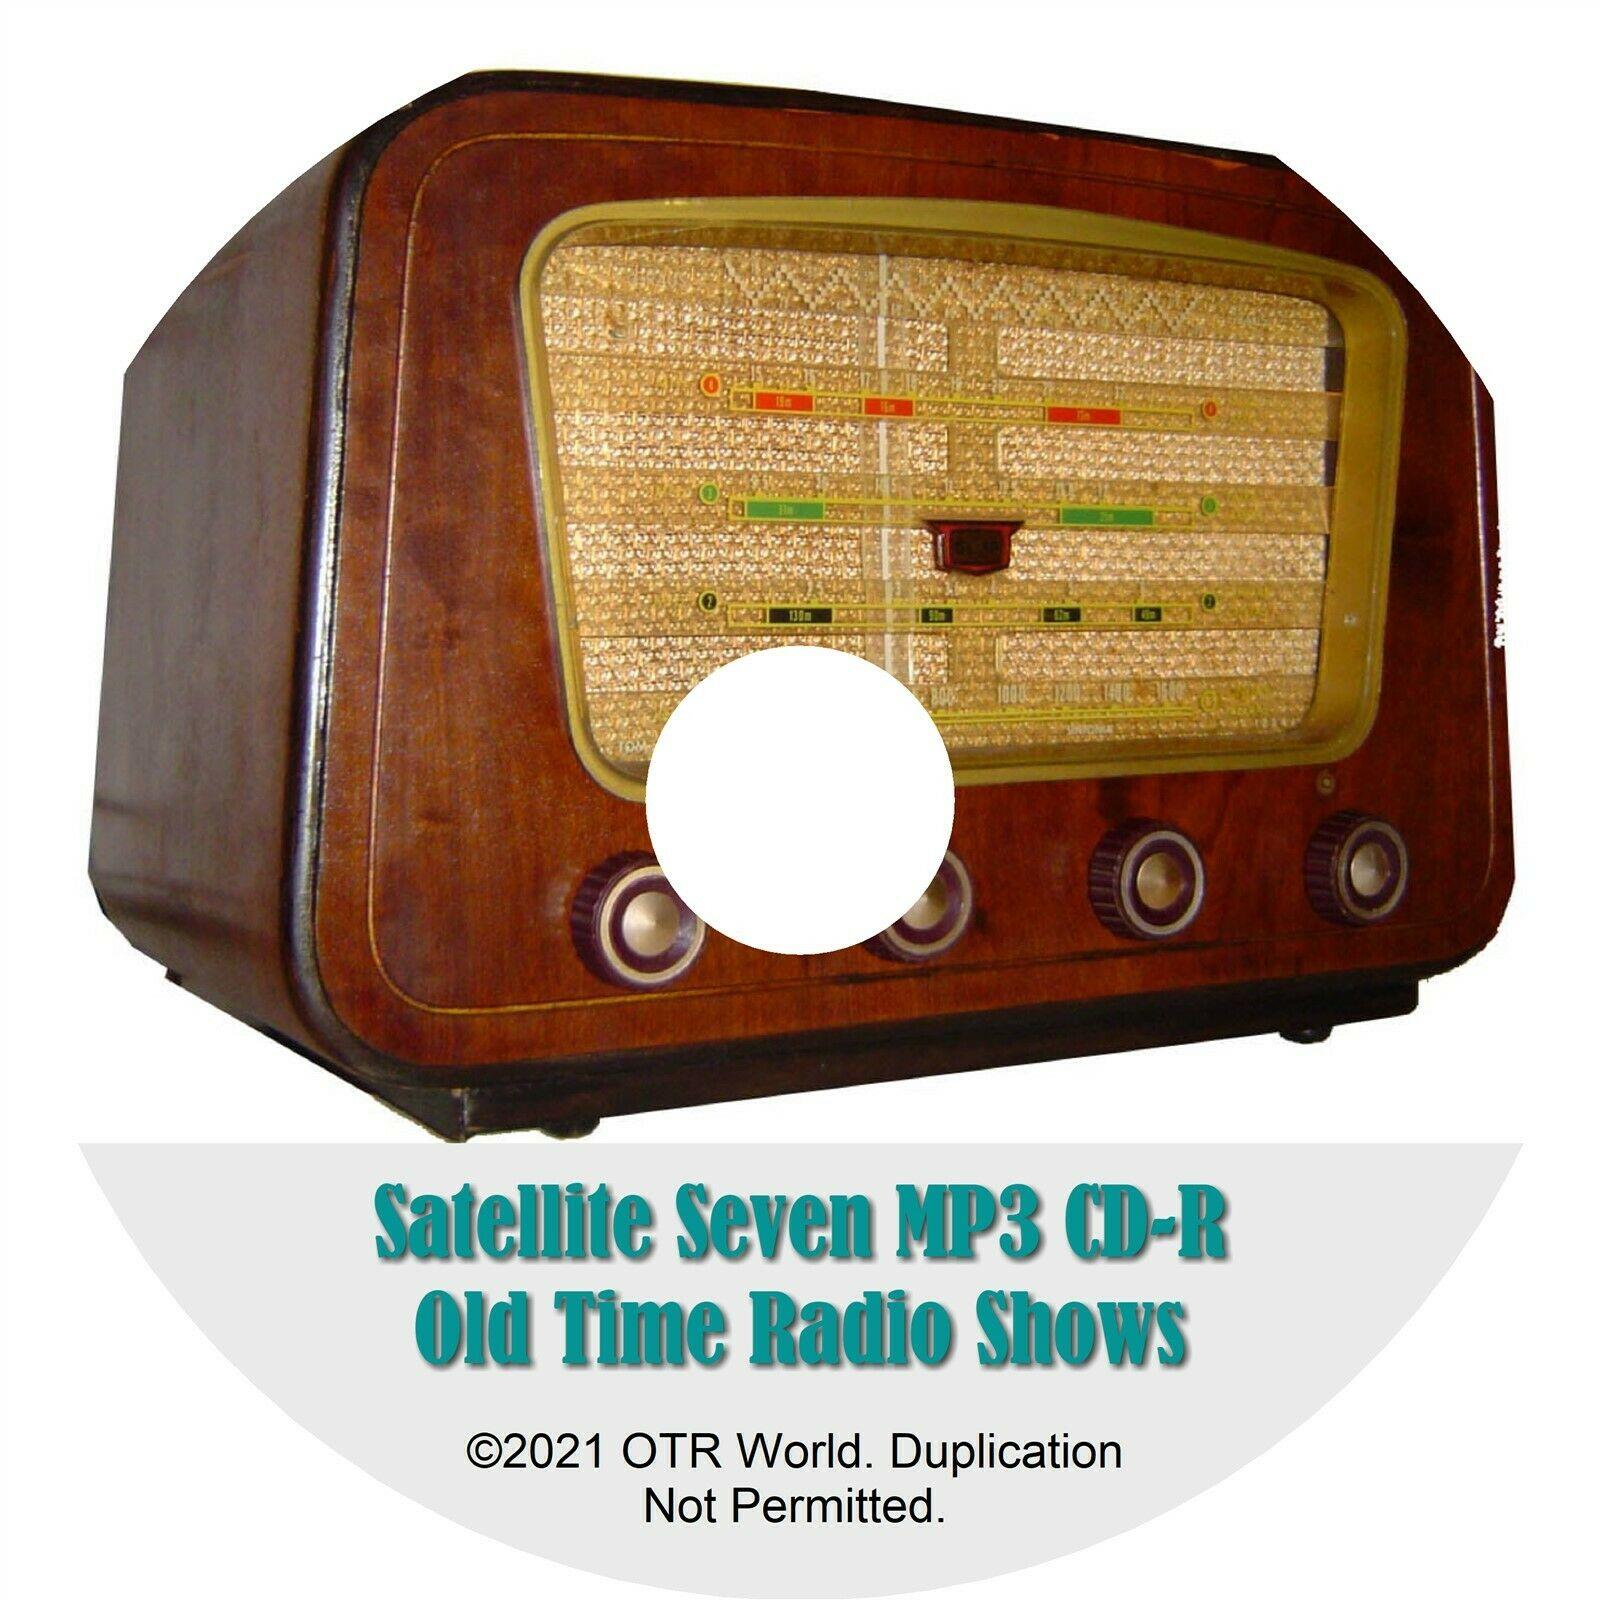 Satellite Seven OTRS OTR Old Time Radio Shows MP3 On CD-R 8 Episodes